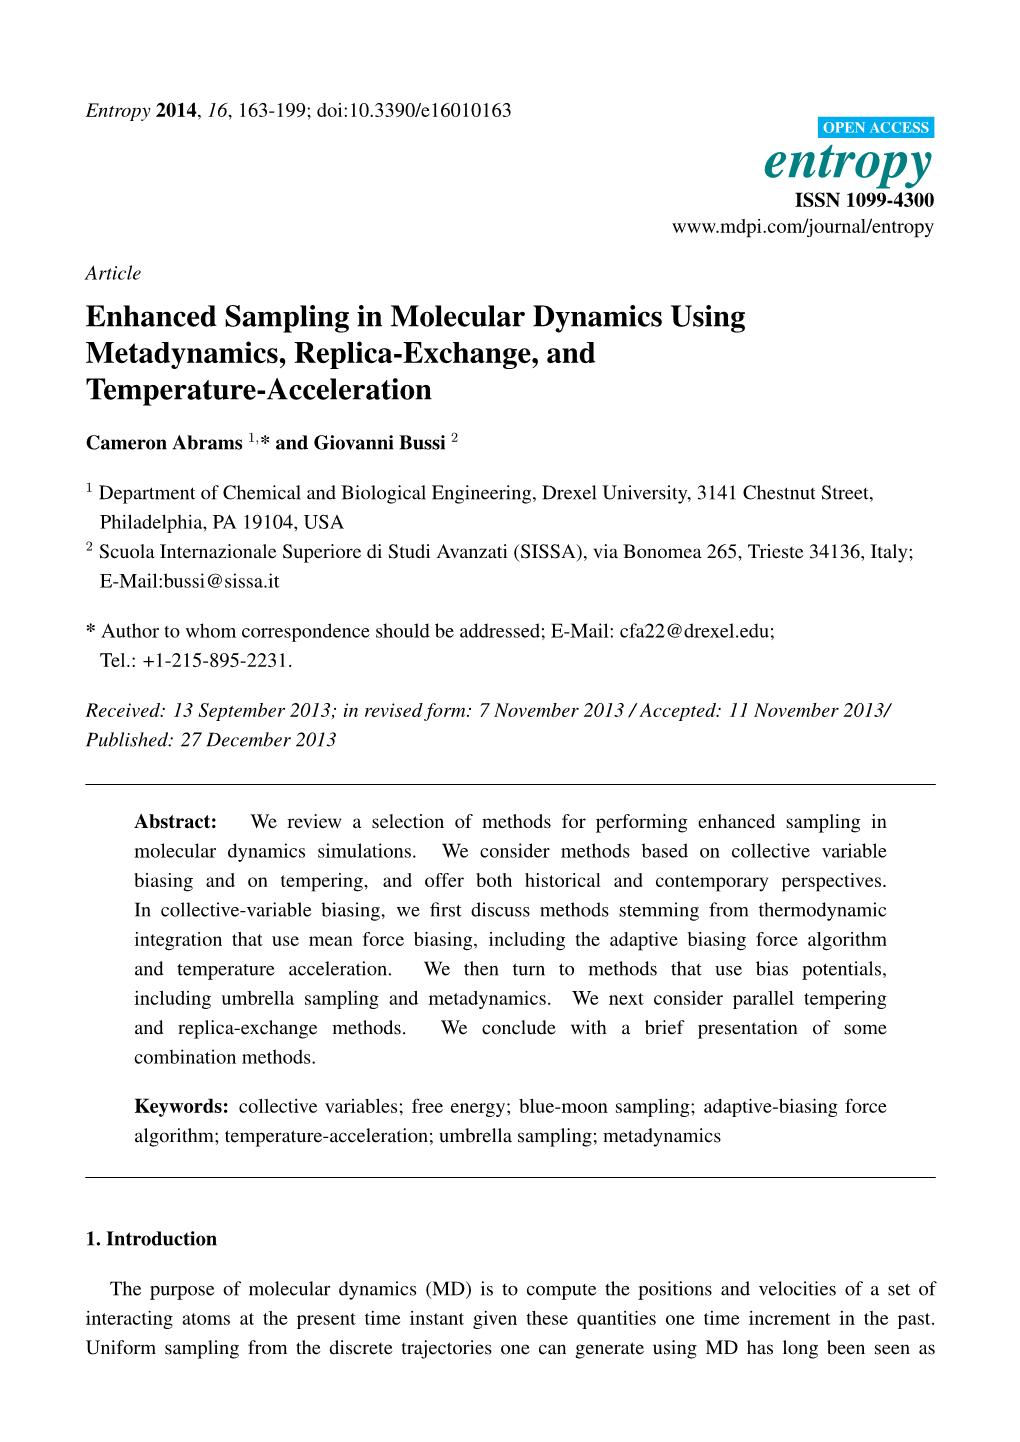 Enhanced Sampling in Molecular Dynamics Using Metadynamics, Replica-Exchange, and Temperature-Acceleration